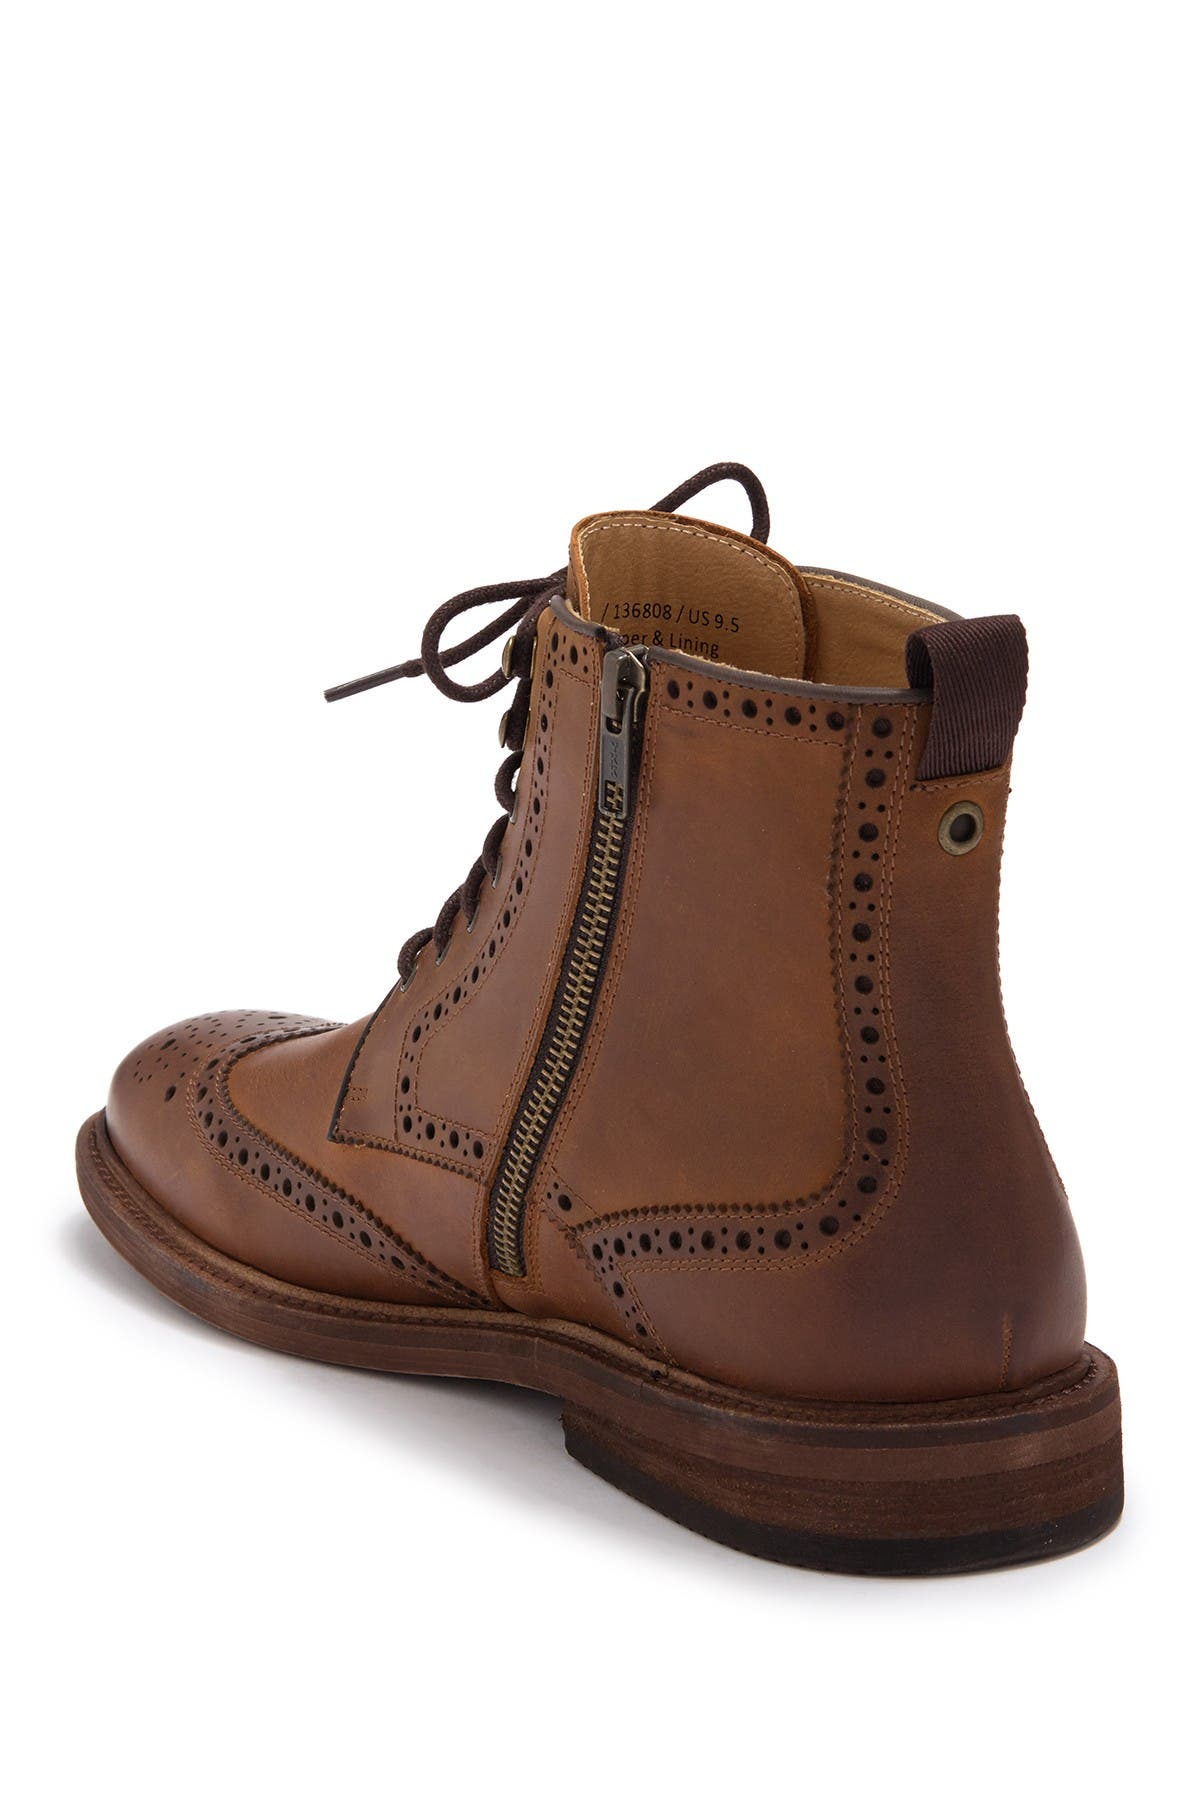 Warfield \u0026 Grand Boots for Men 